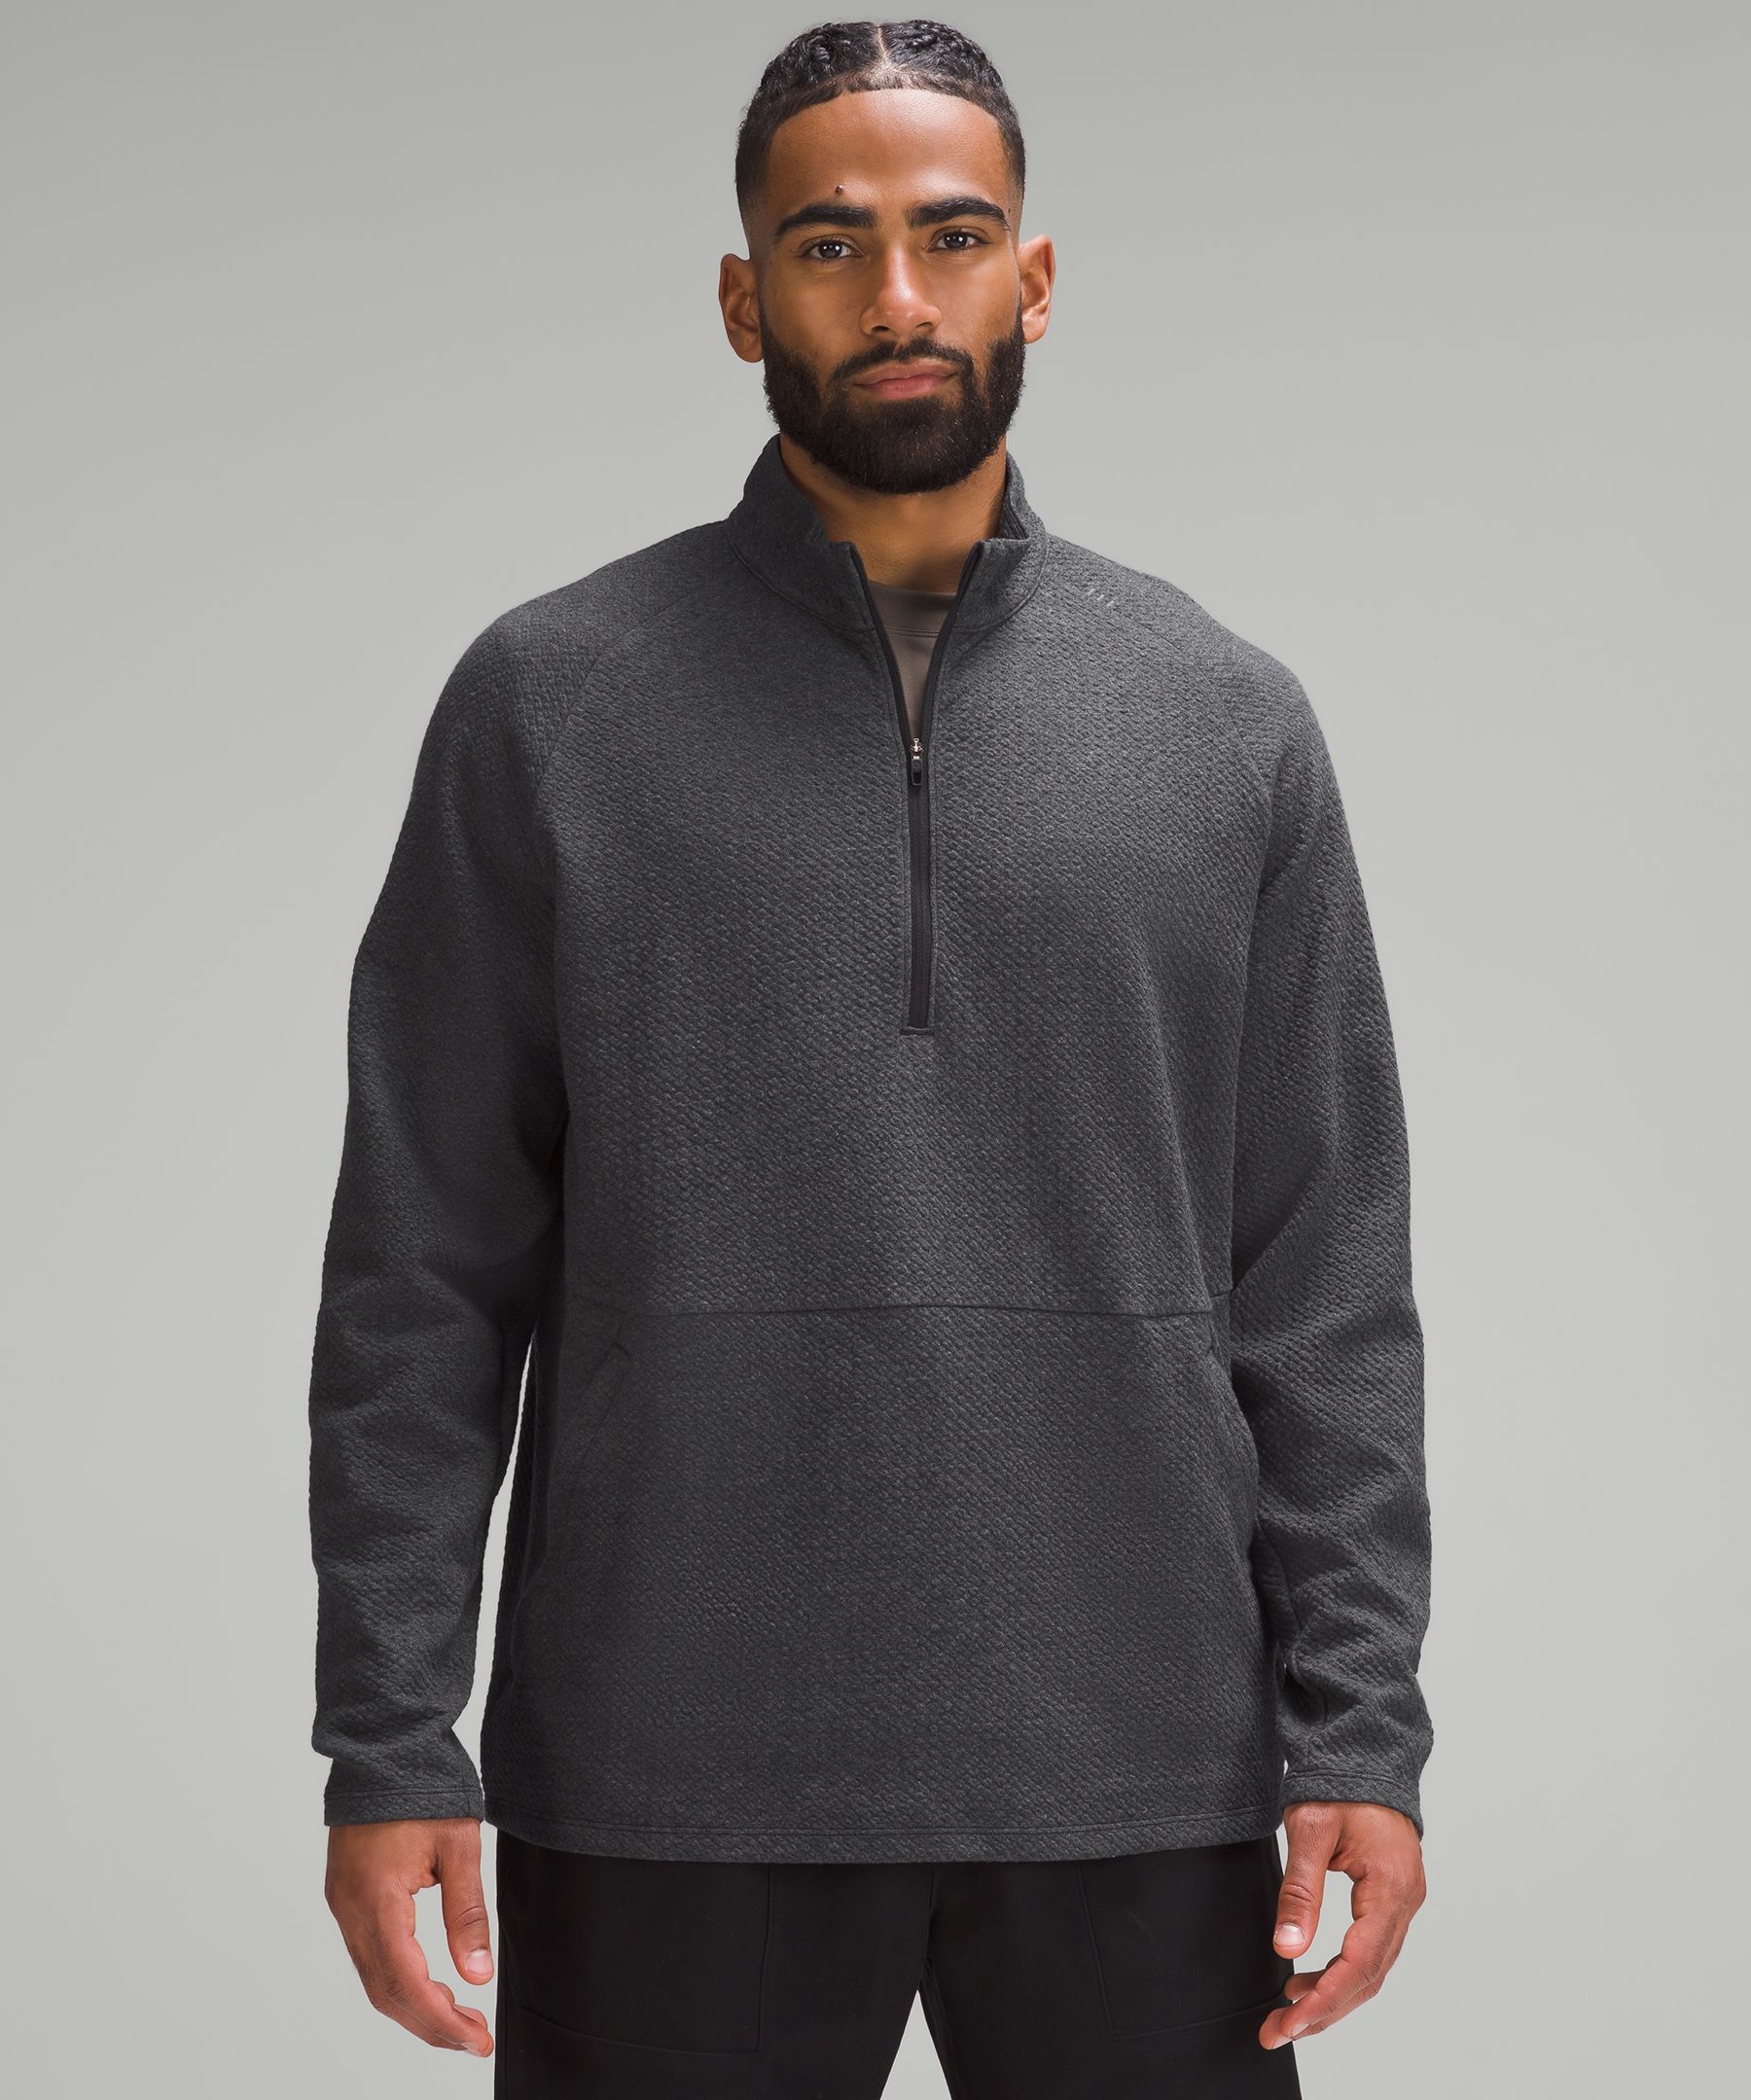 At Ease Half Zip | Men's Hoodies & Sweatshirts | lululemon Canada